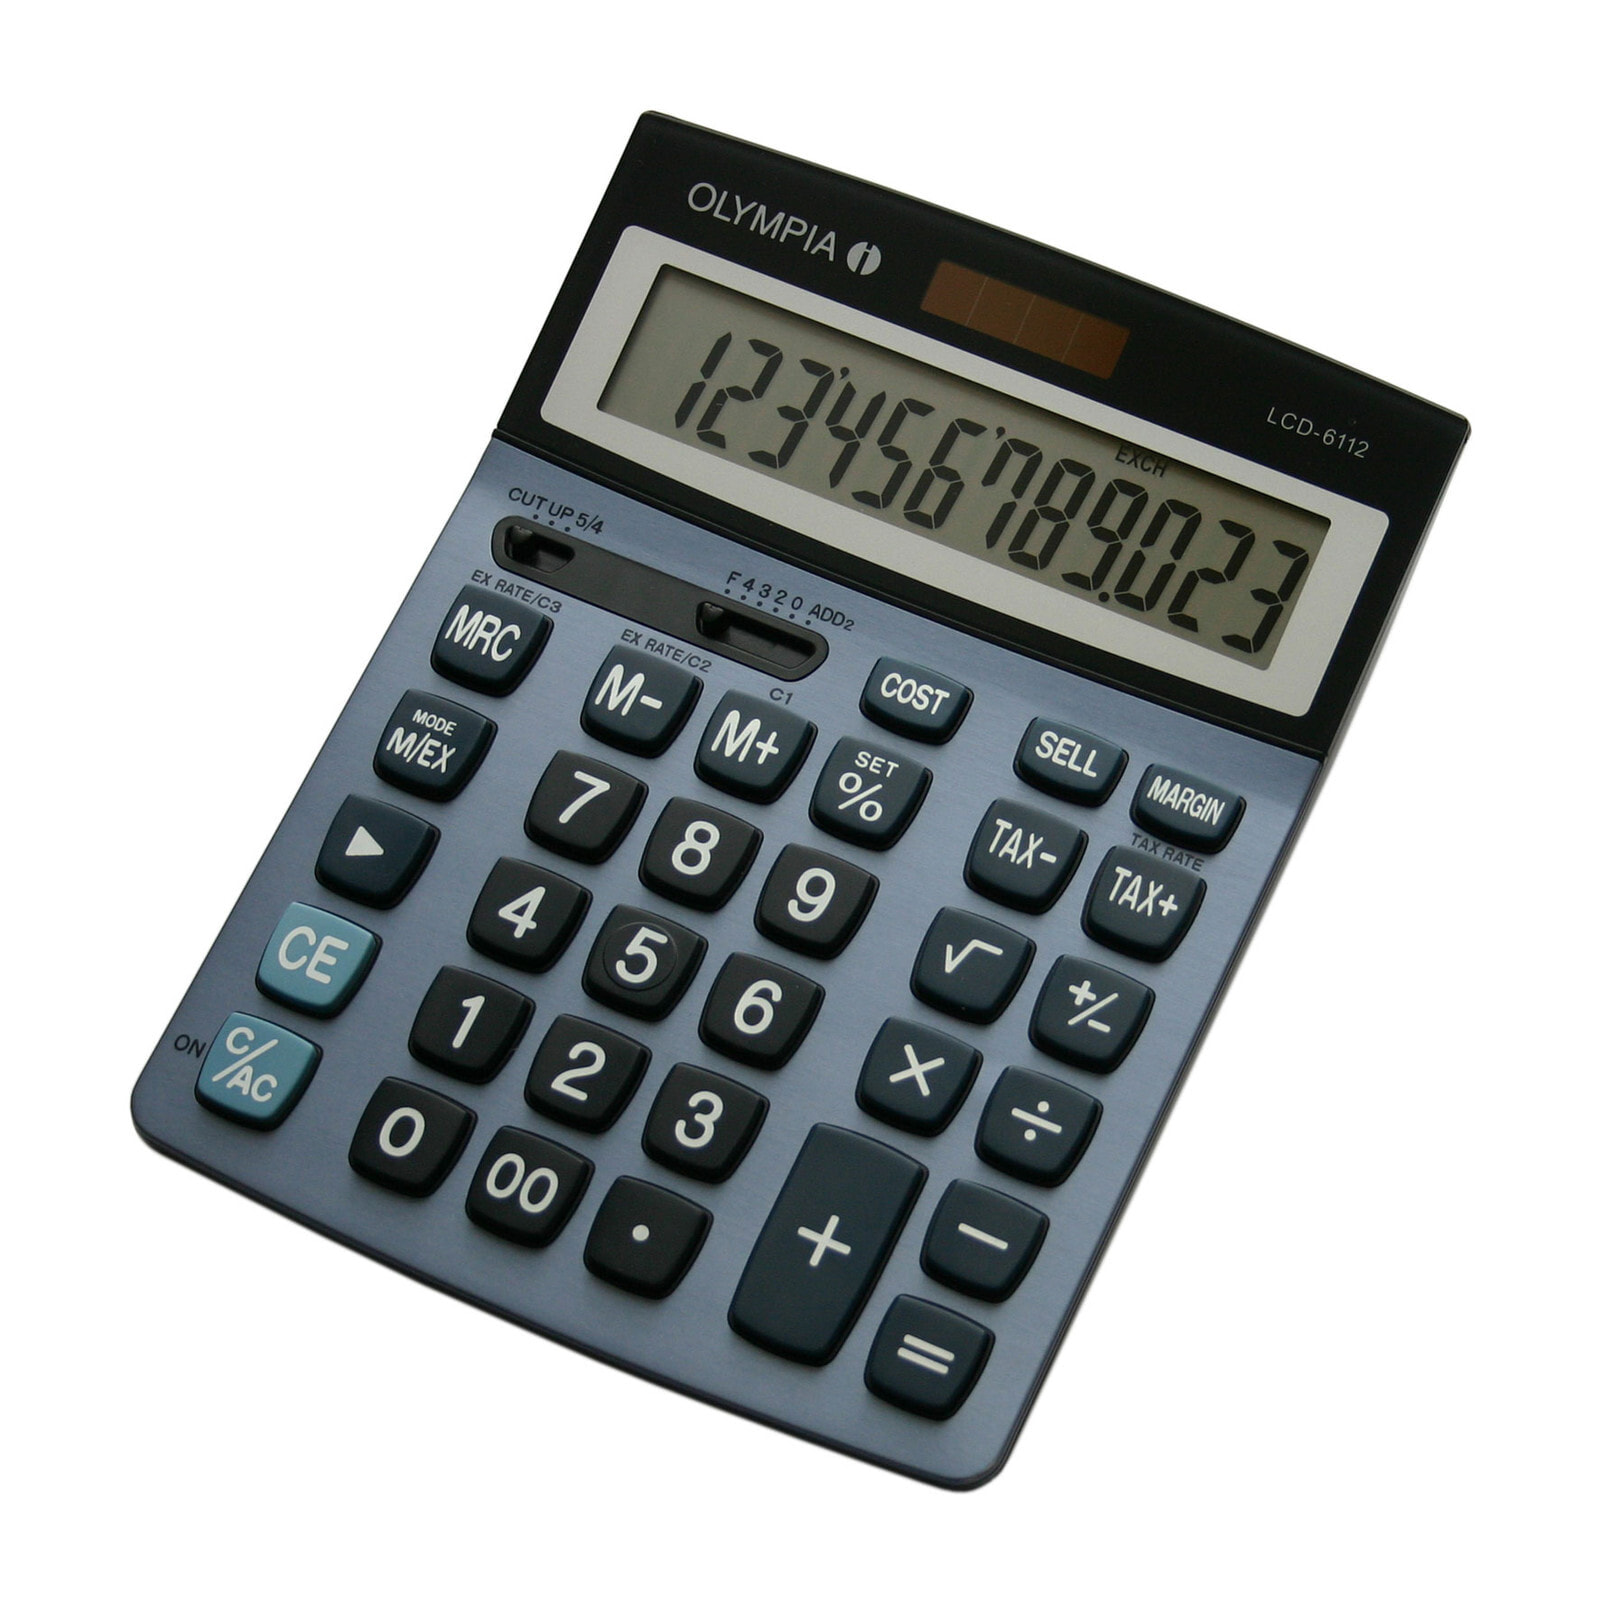 Olympia LCD 6112 калькулятор Настольный Базовый 941911003